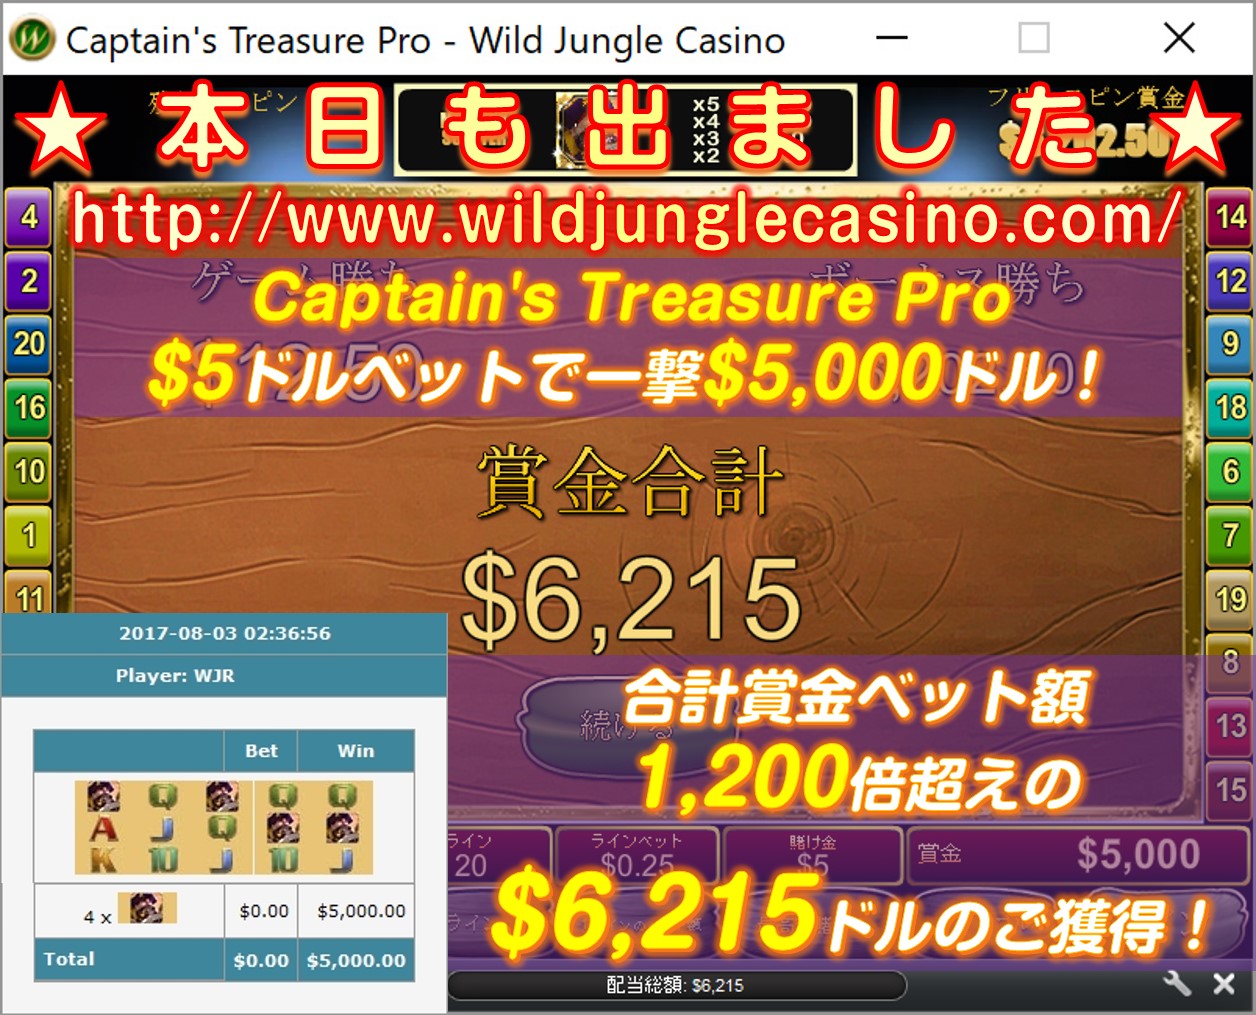 8.3_WJR62543242_HIROSHI TAKAHASHI_Captain's Treasure Pro_$6,215